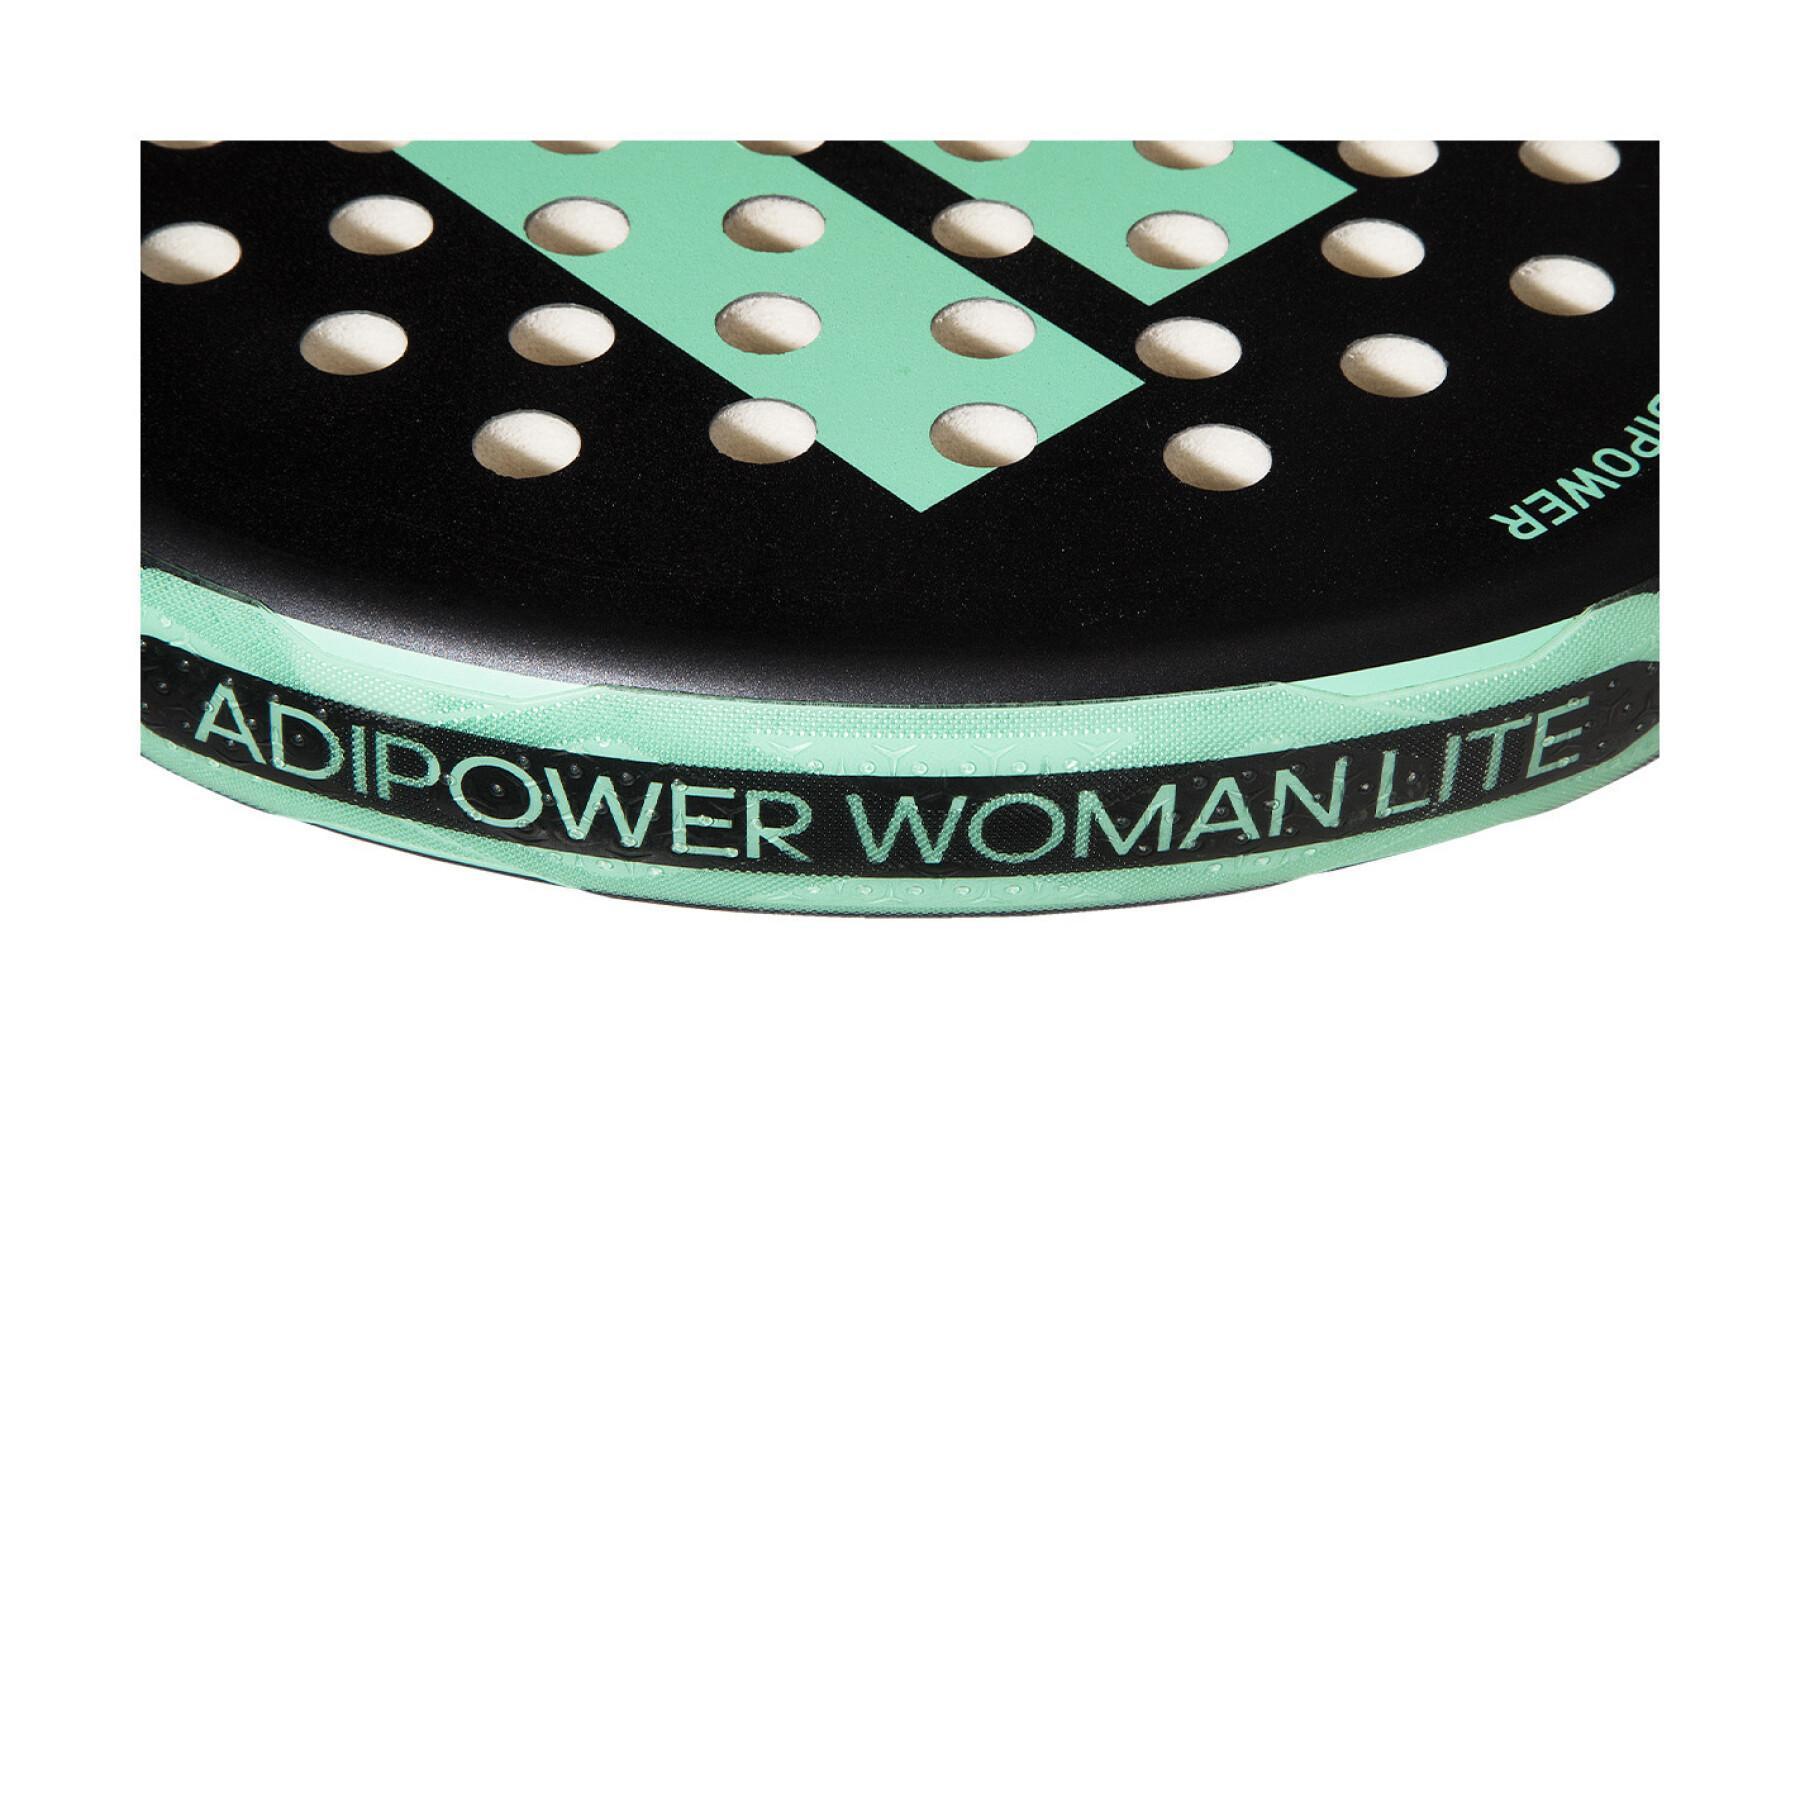 Women's paddle racket adidas Adipower Lite 3.1